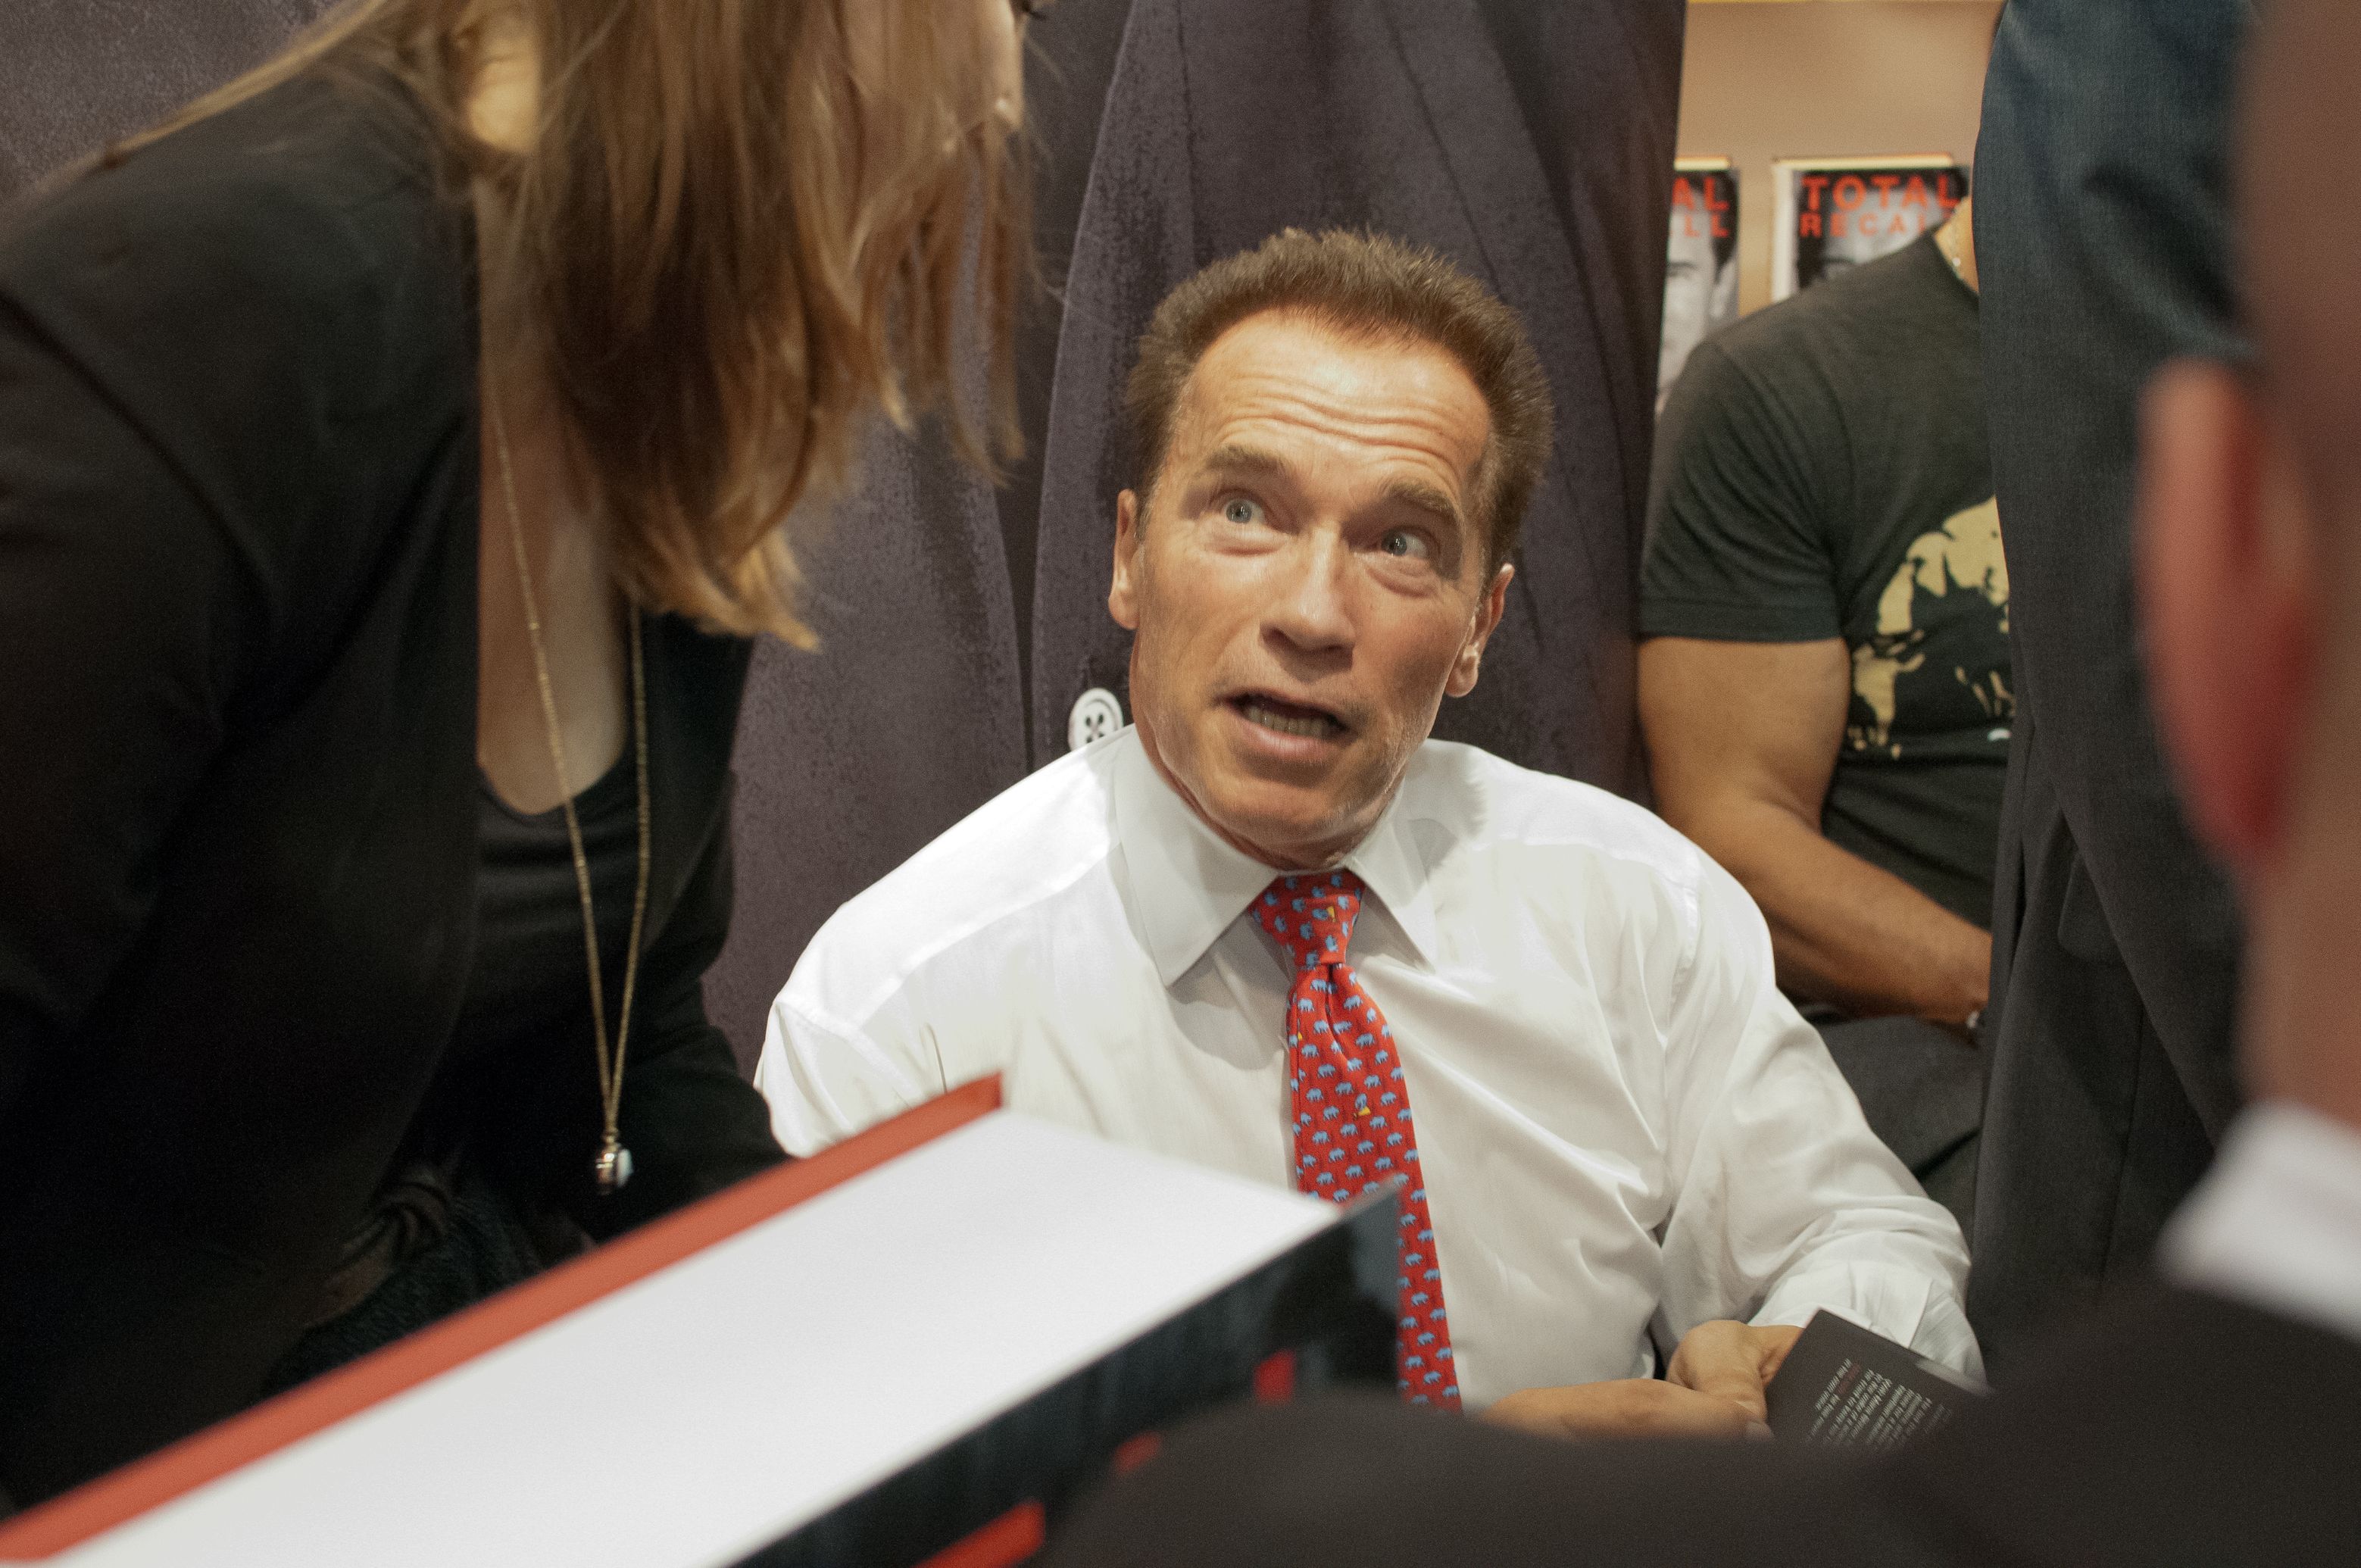 Arnold Schwarzenegger signing books at Frankfurt Bookfair 2012, Frankfurt am Main